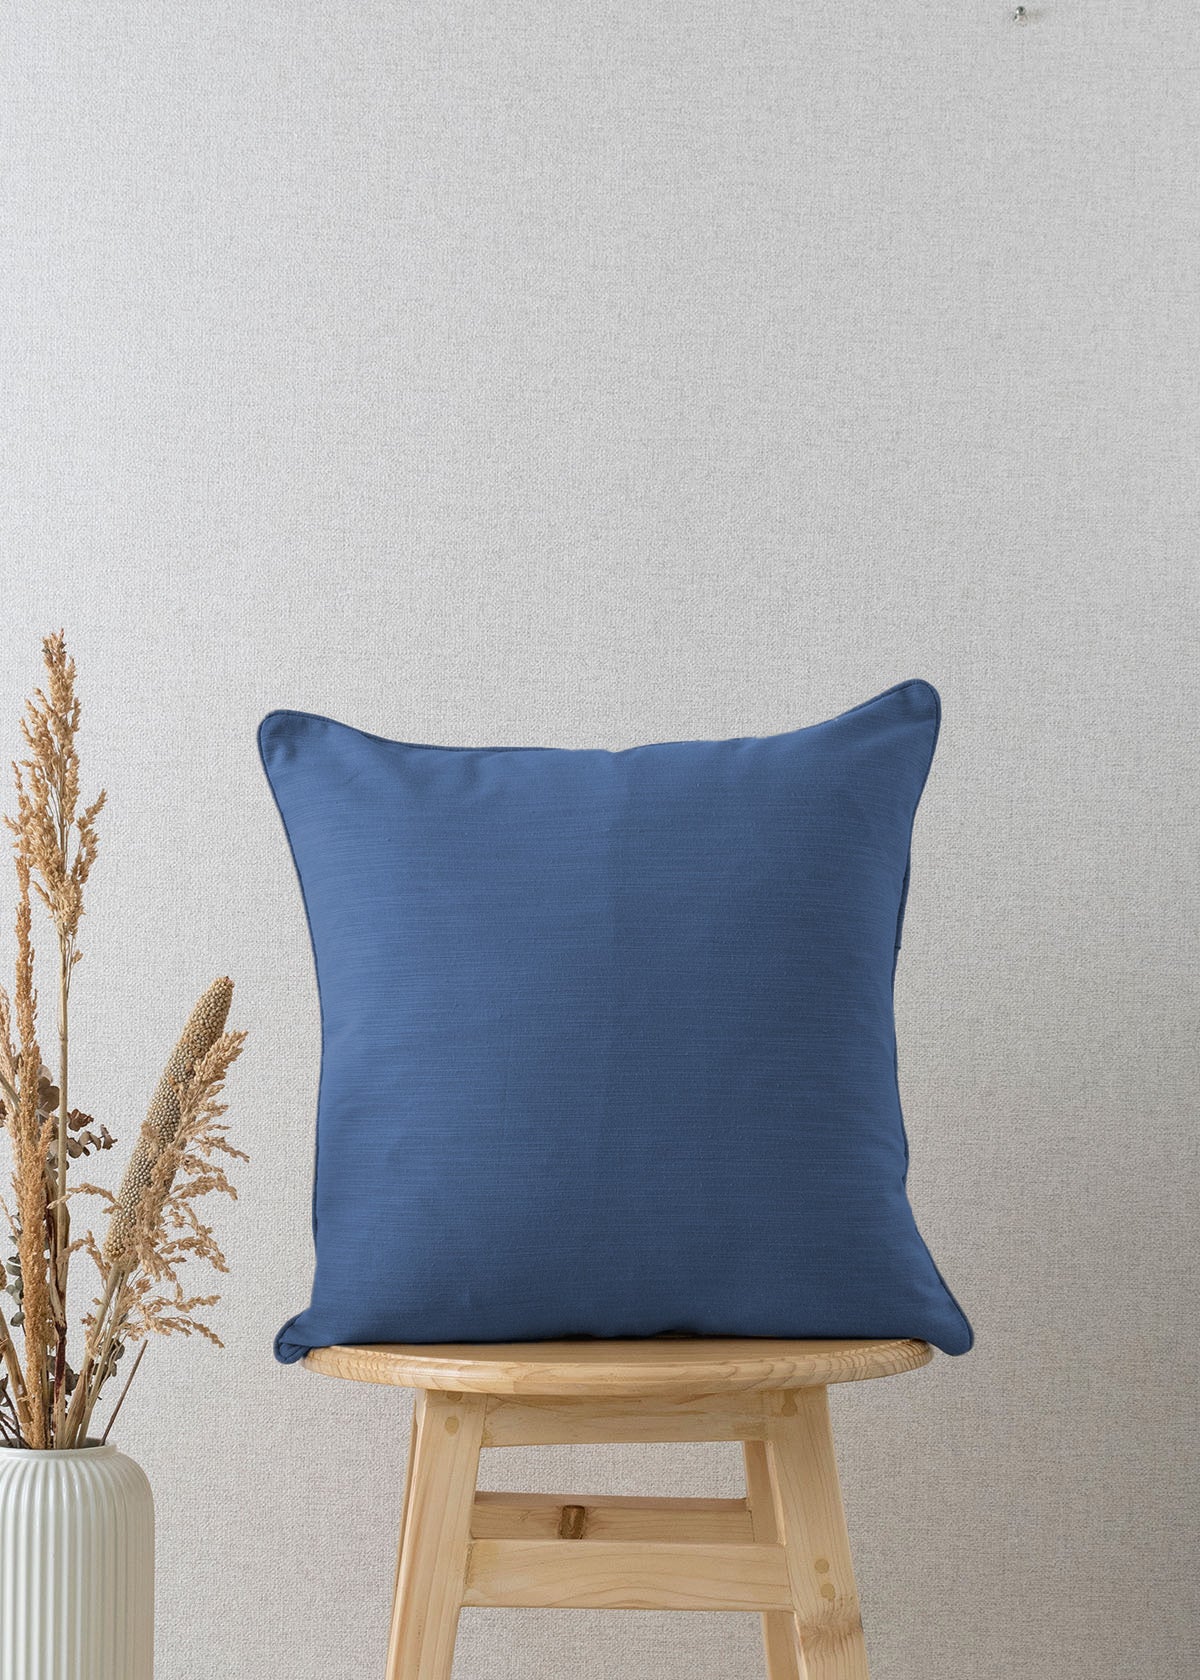 Solid Royal Blue 100% cotton plain cushion cover for sofa